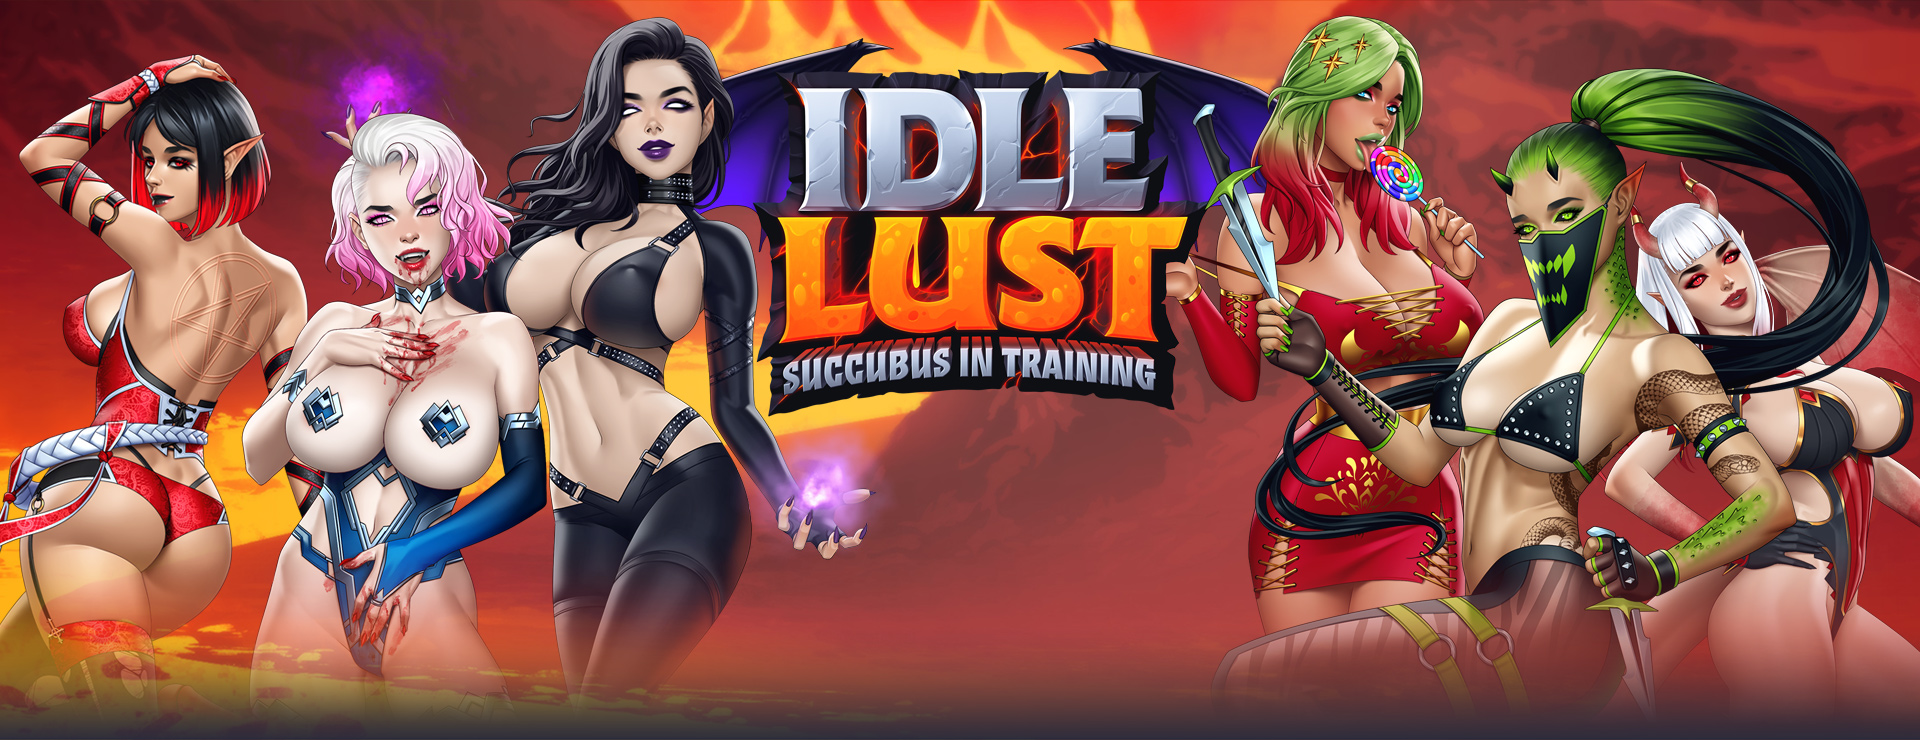 Idle Lust - Idle Game